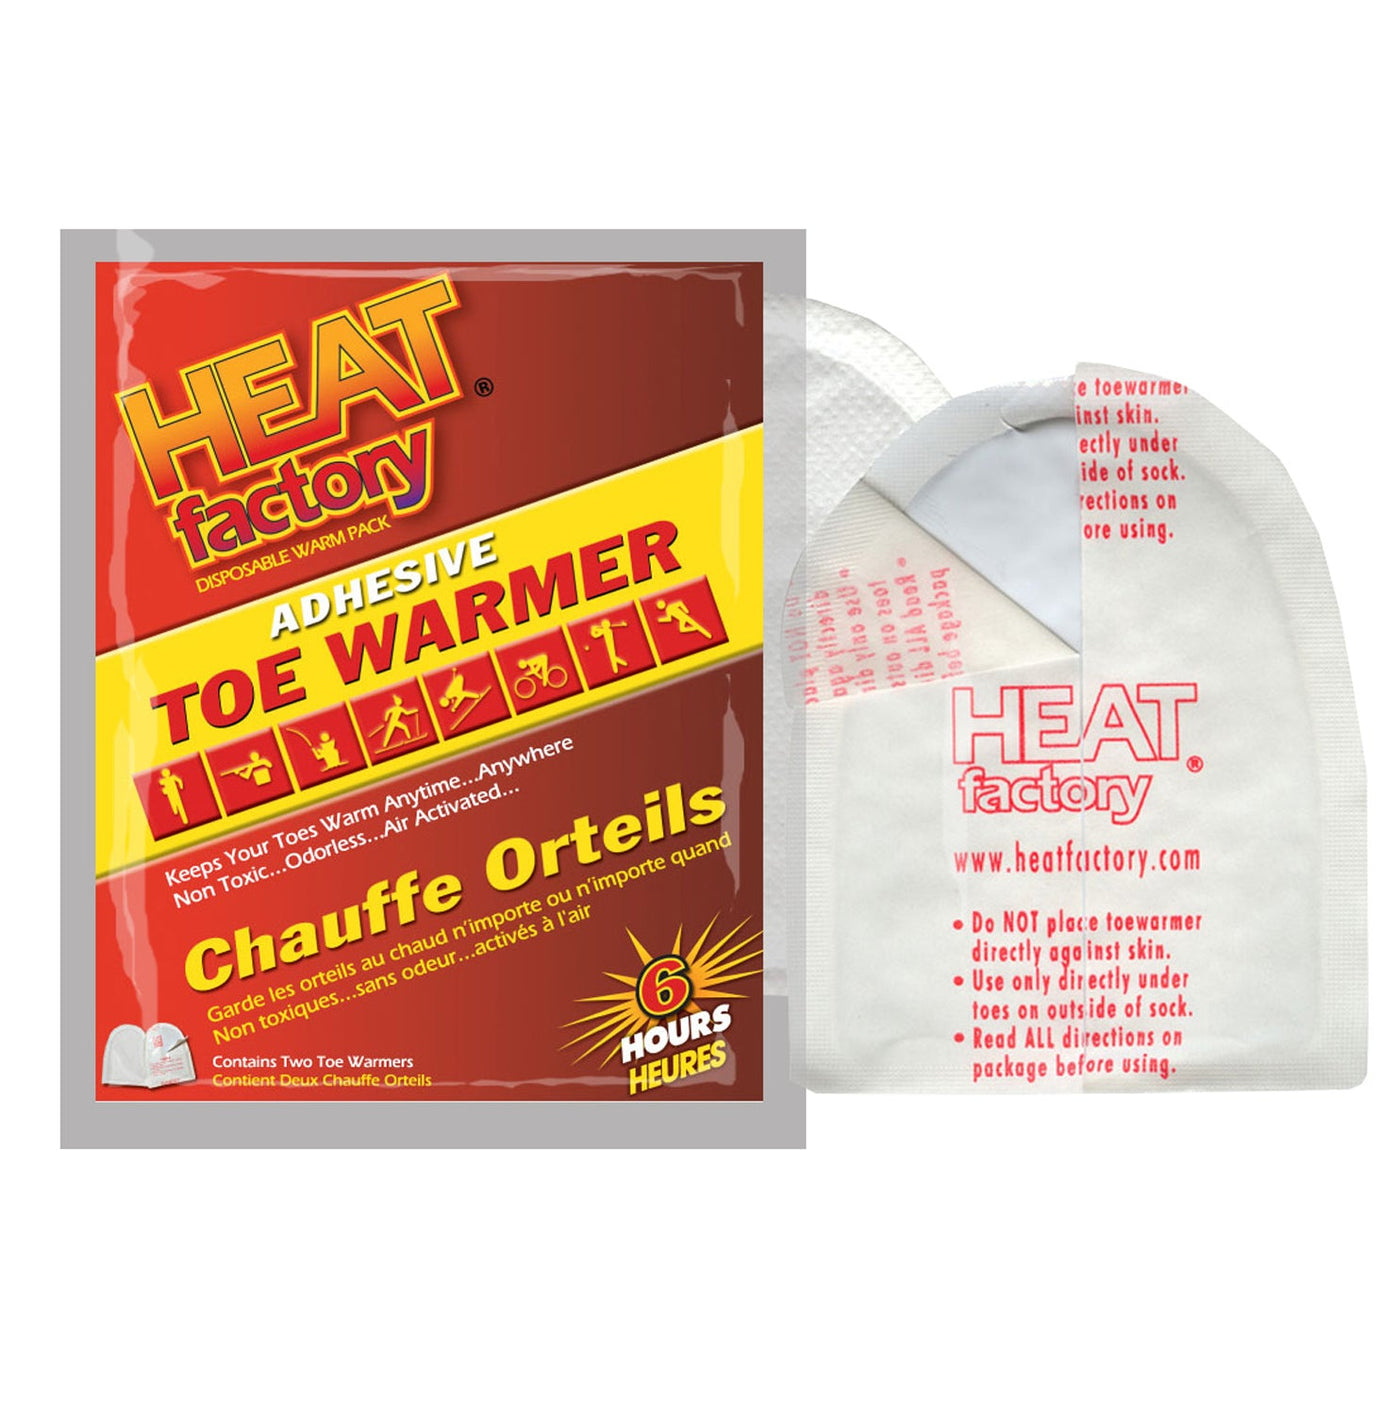 Heat Factory Hand & Body Warmers